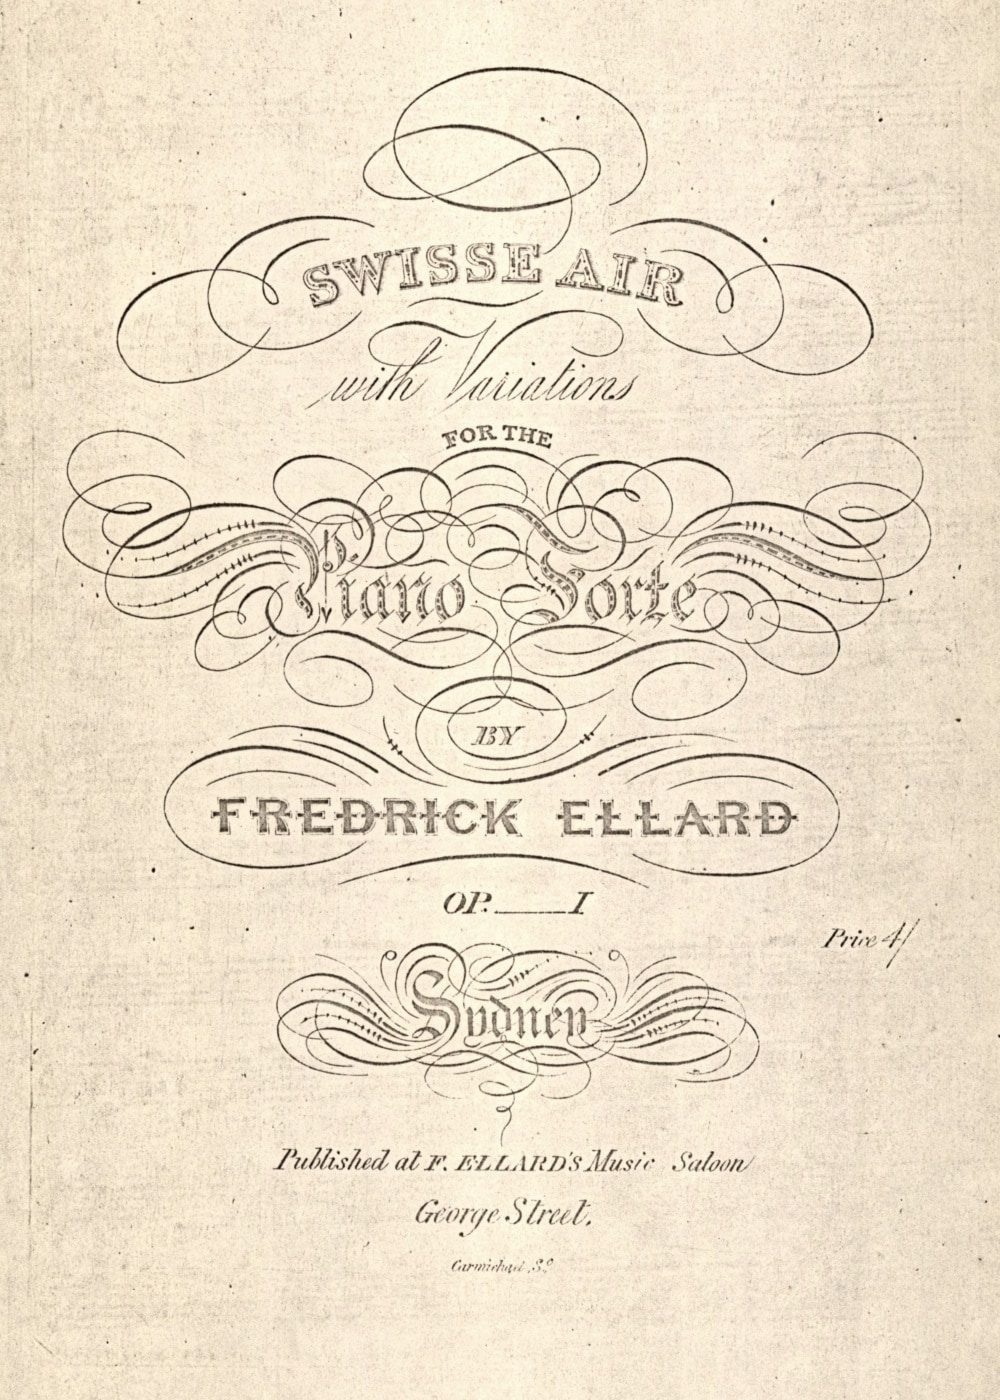 Swisse air with variations for the piano forte by Fredrick Ellard, op. 1 (Sydney: F. Ellard, n.d. [1842])